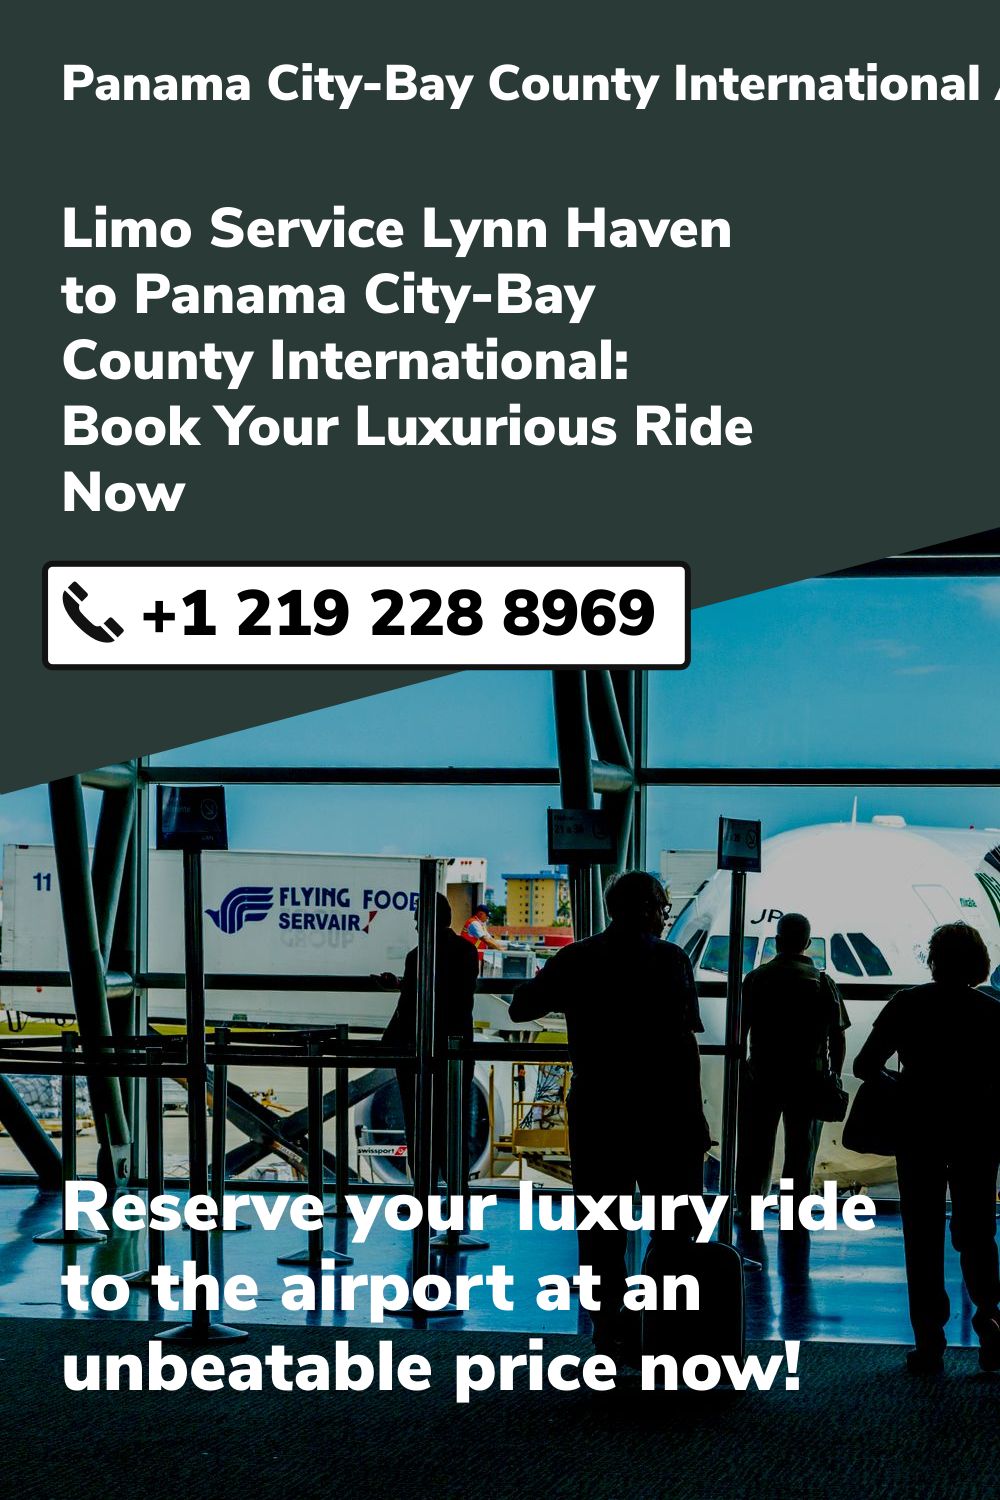 Panama City-Bay County International Airport Limo